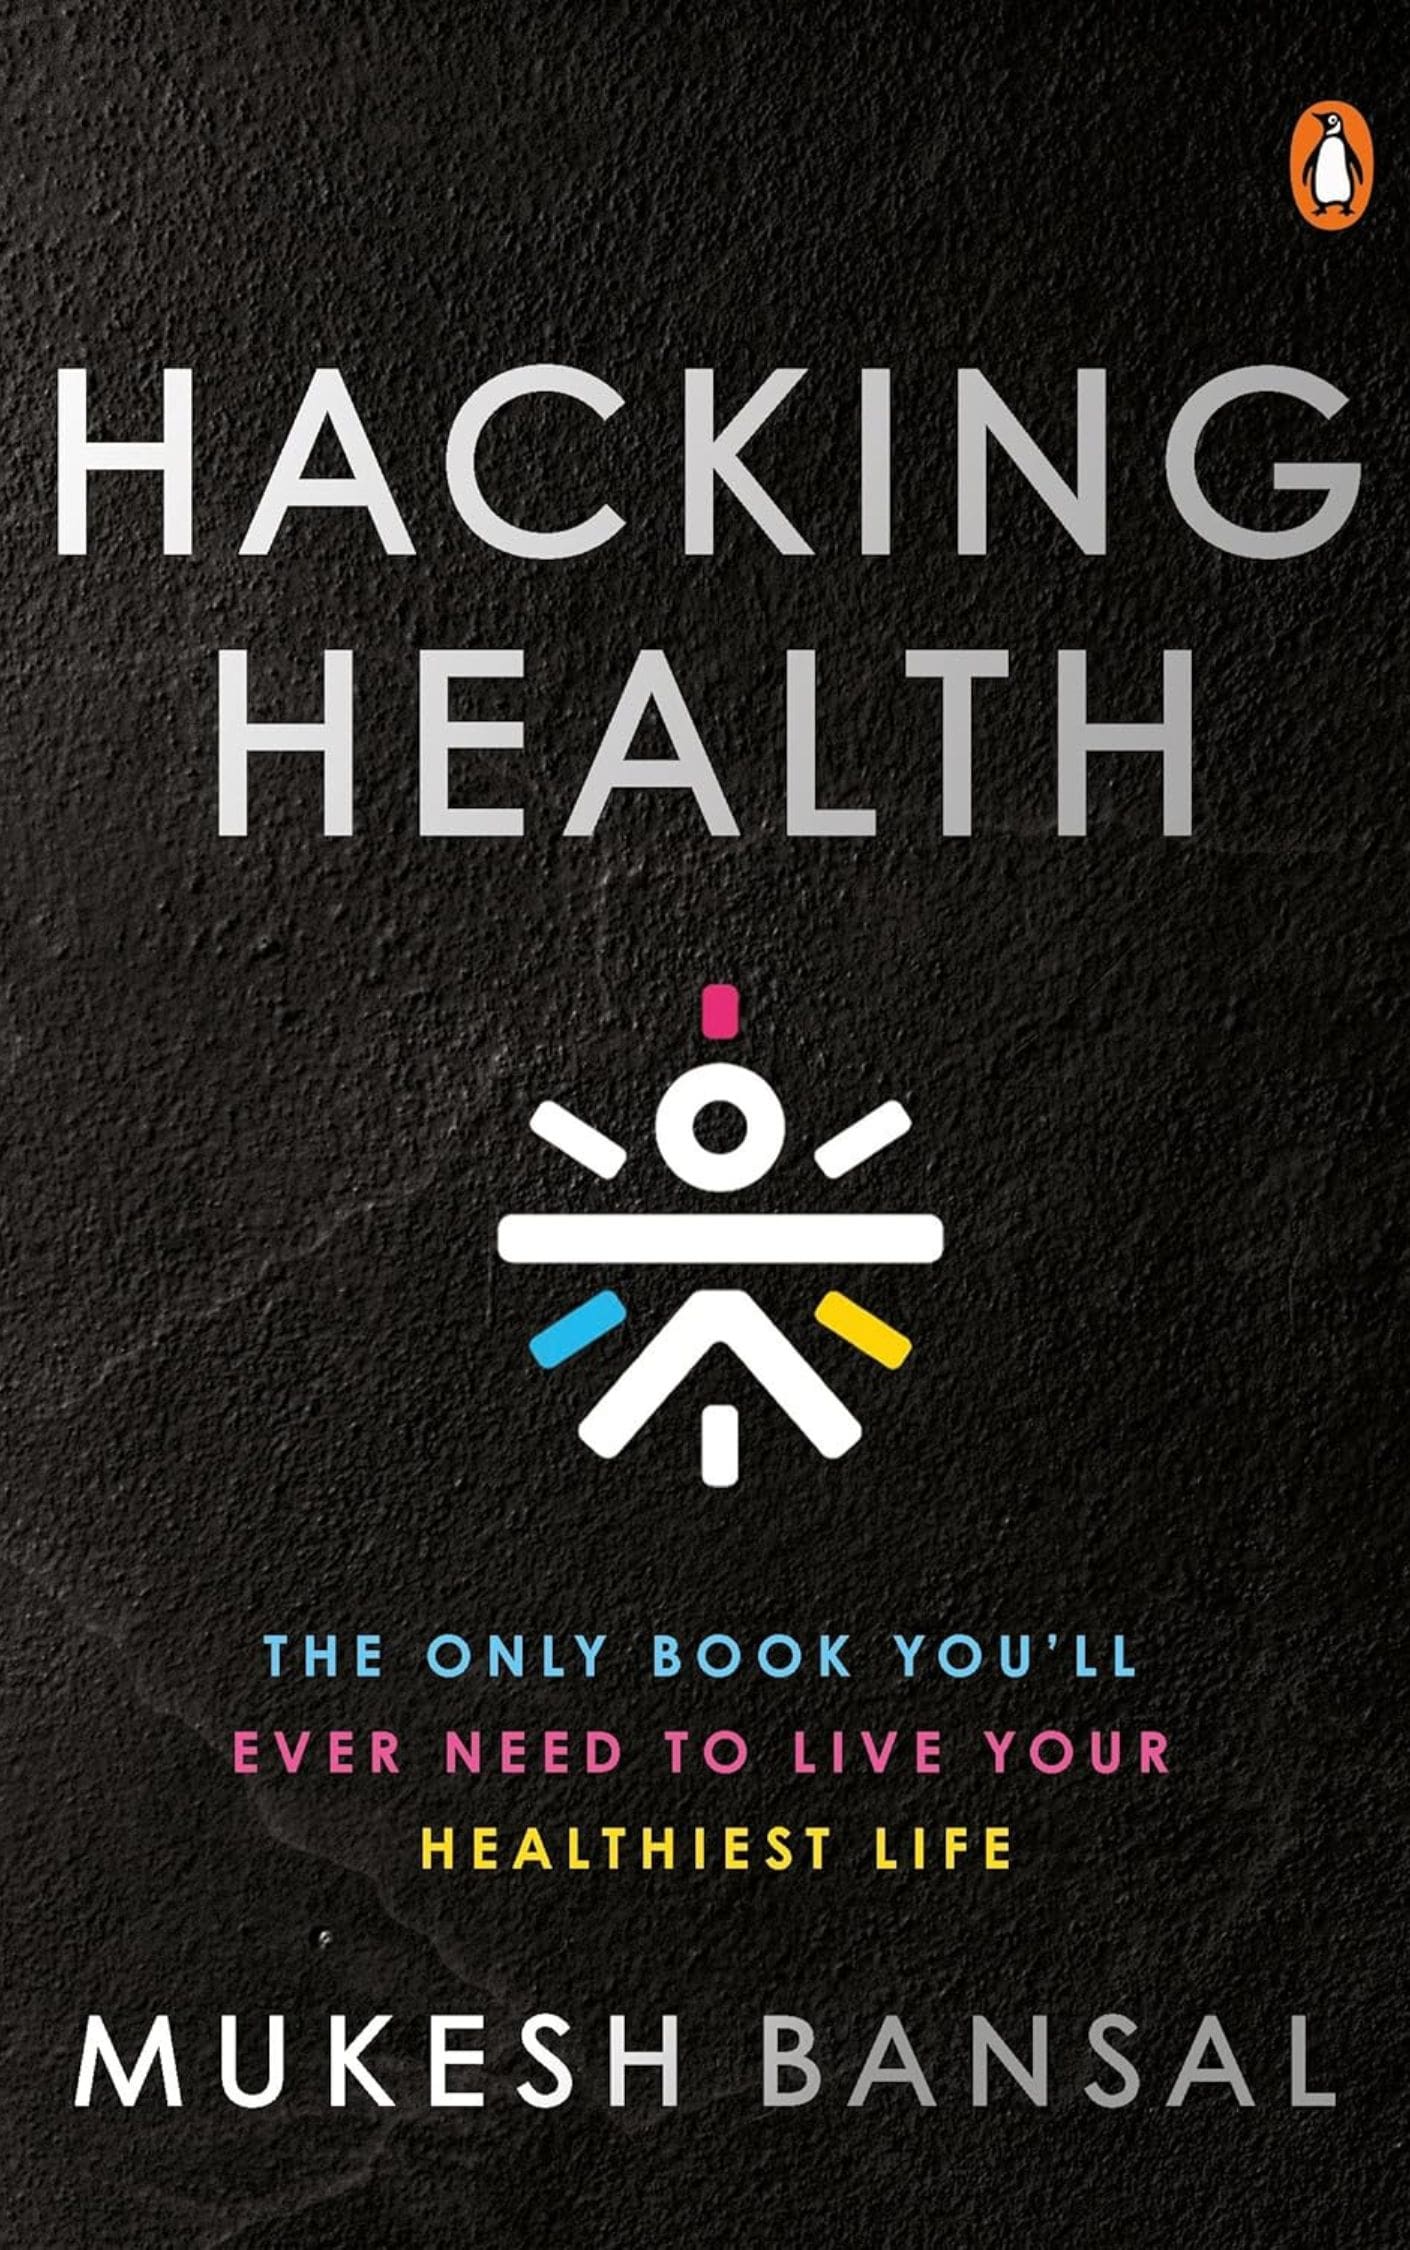 Hacking Health